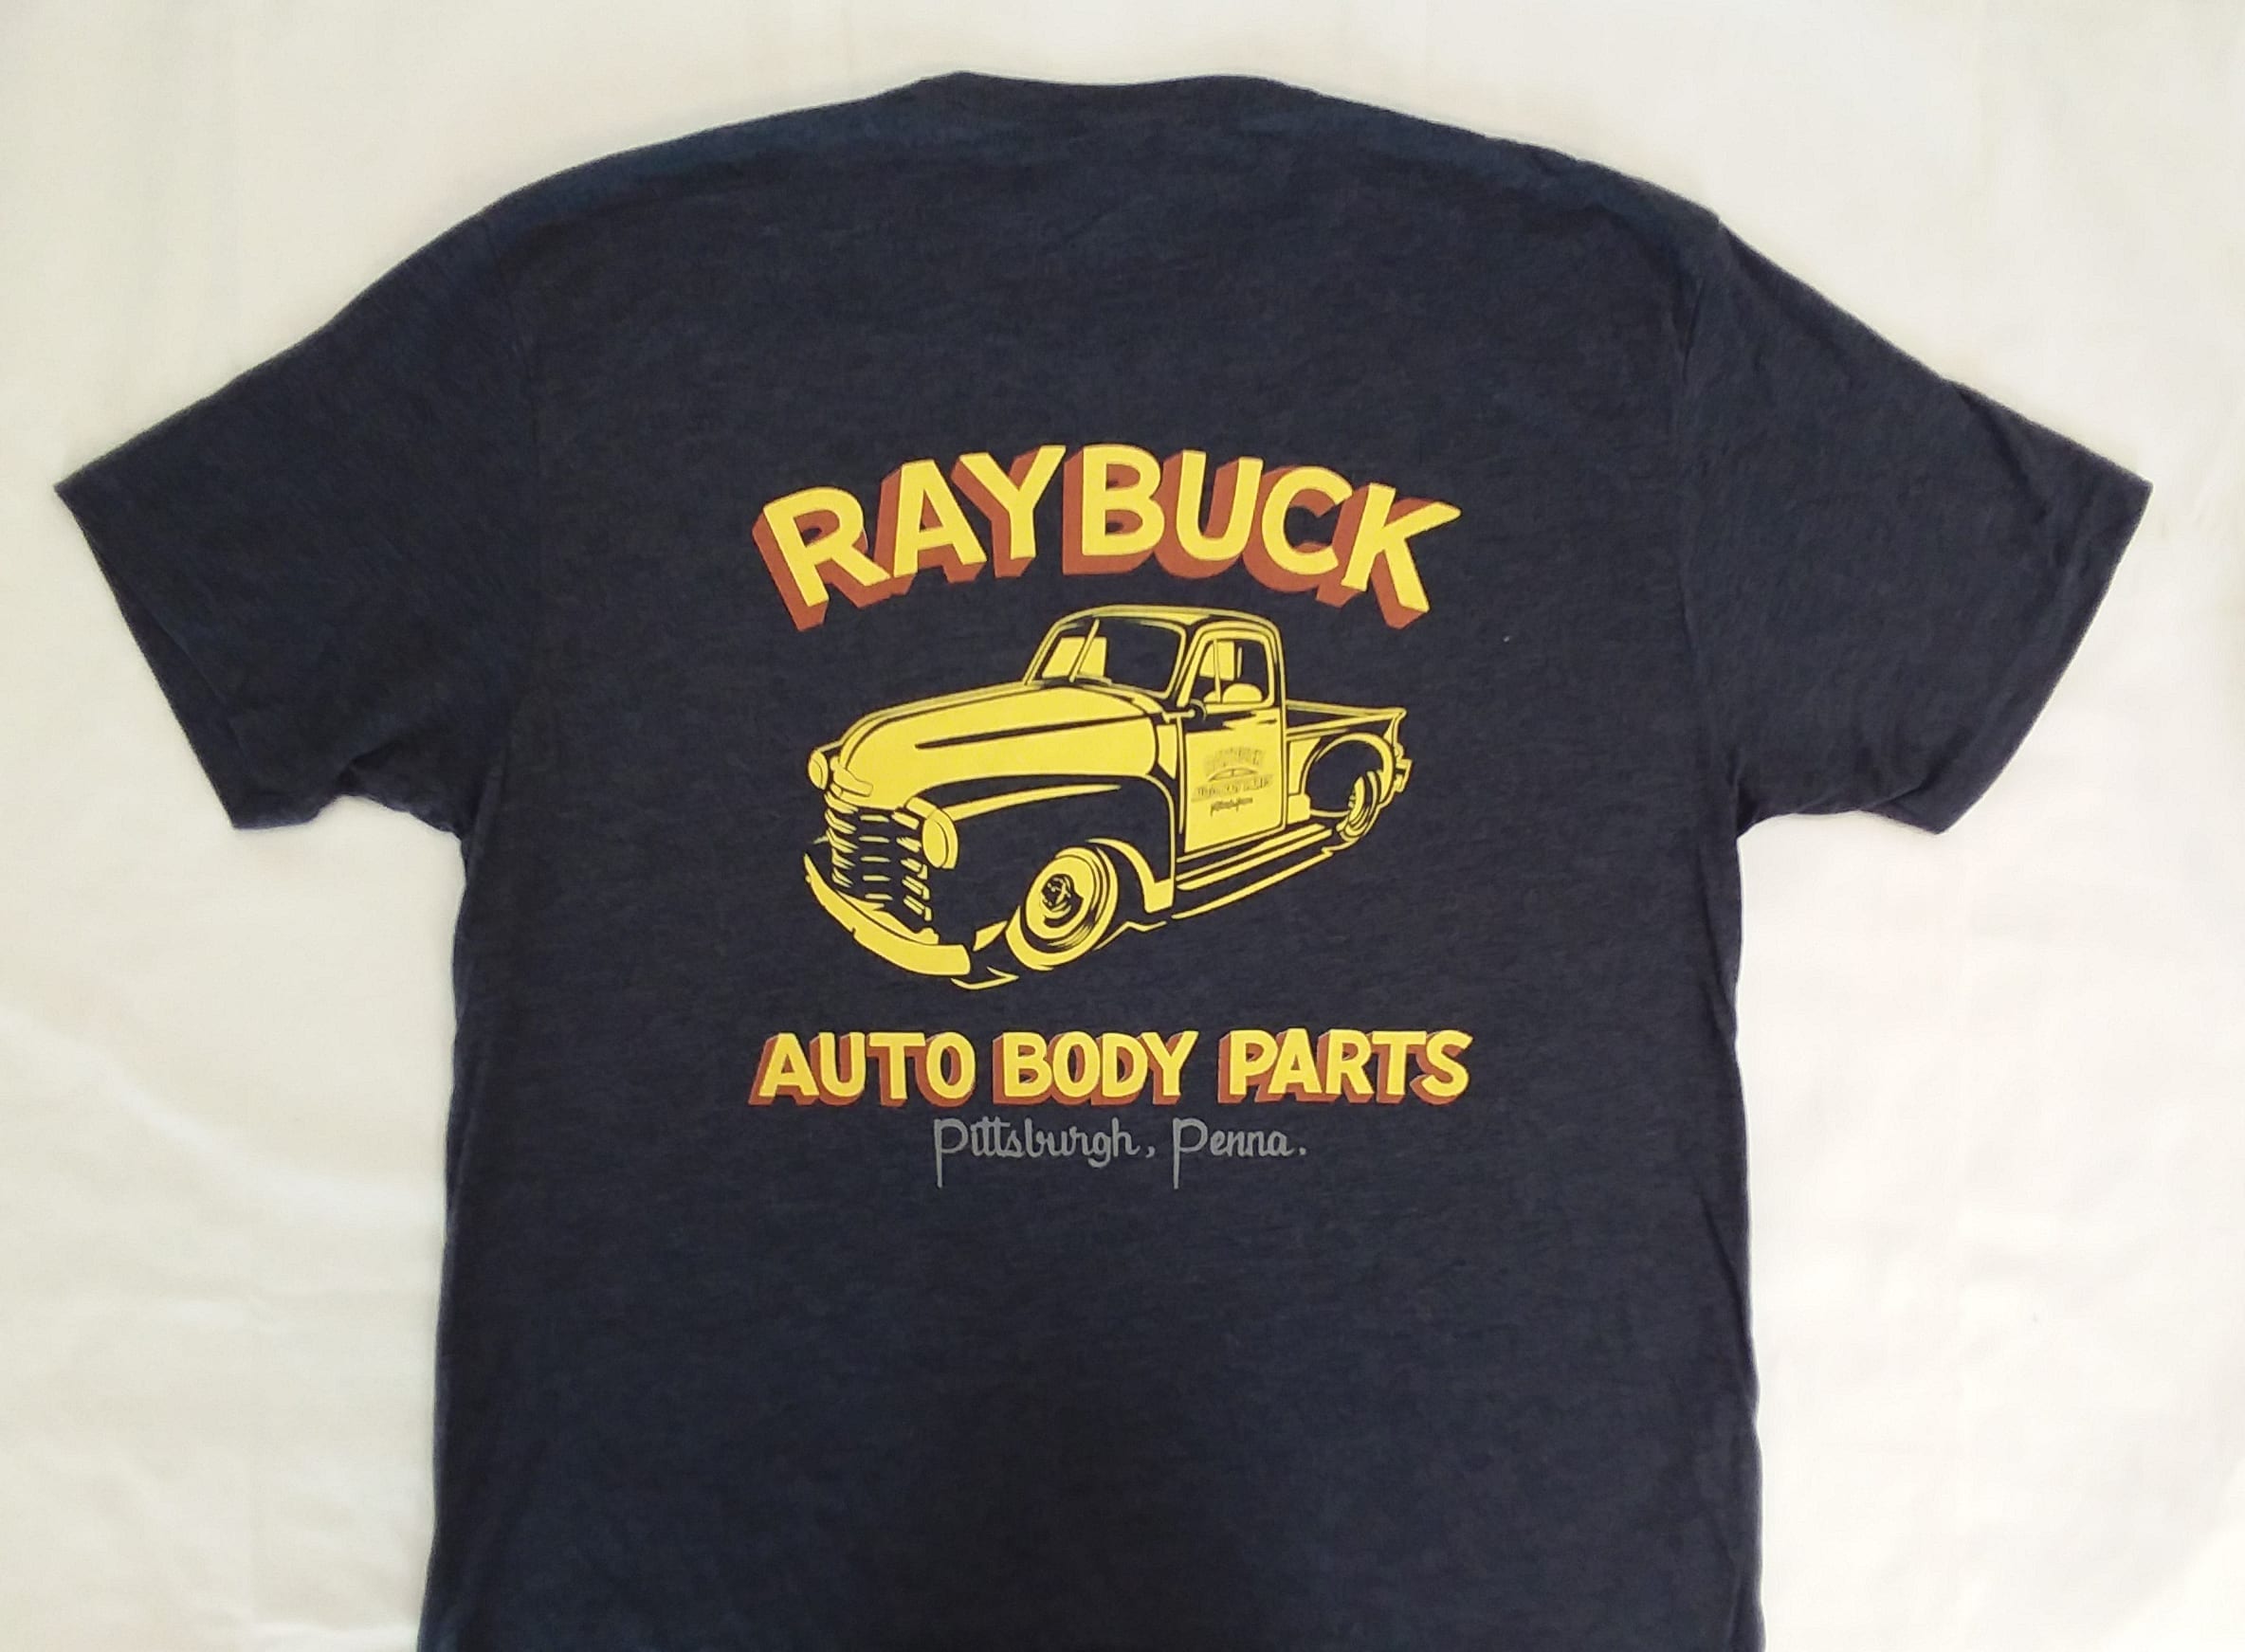 Raybuck t-shirt